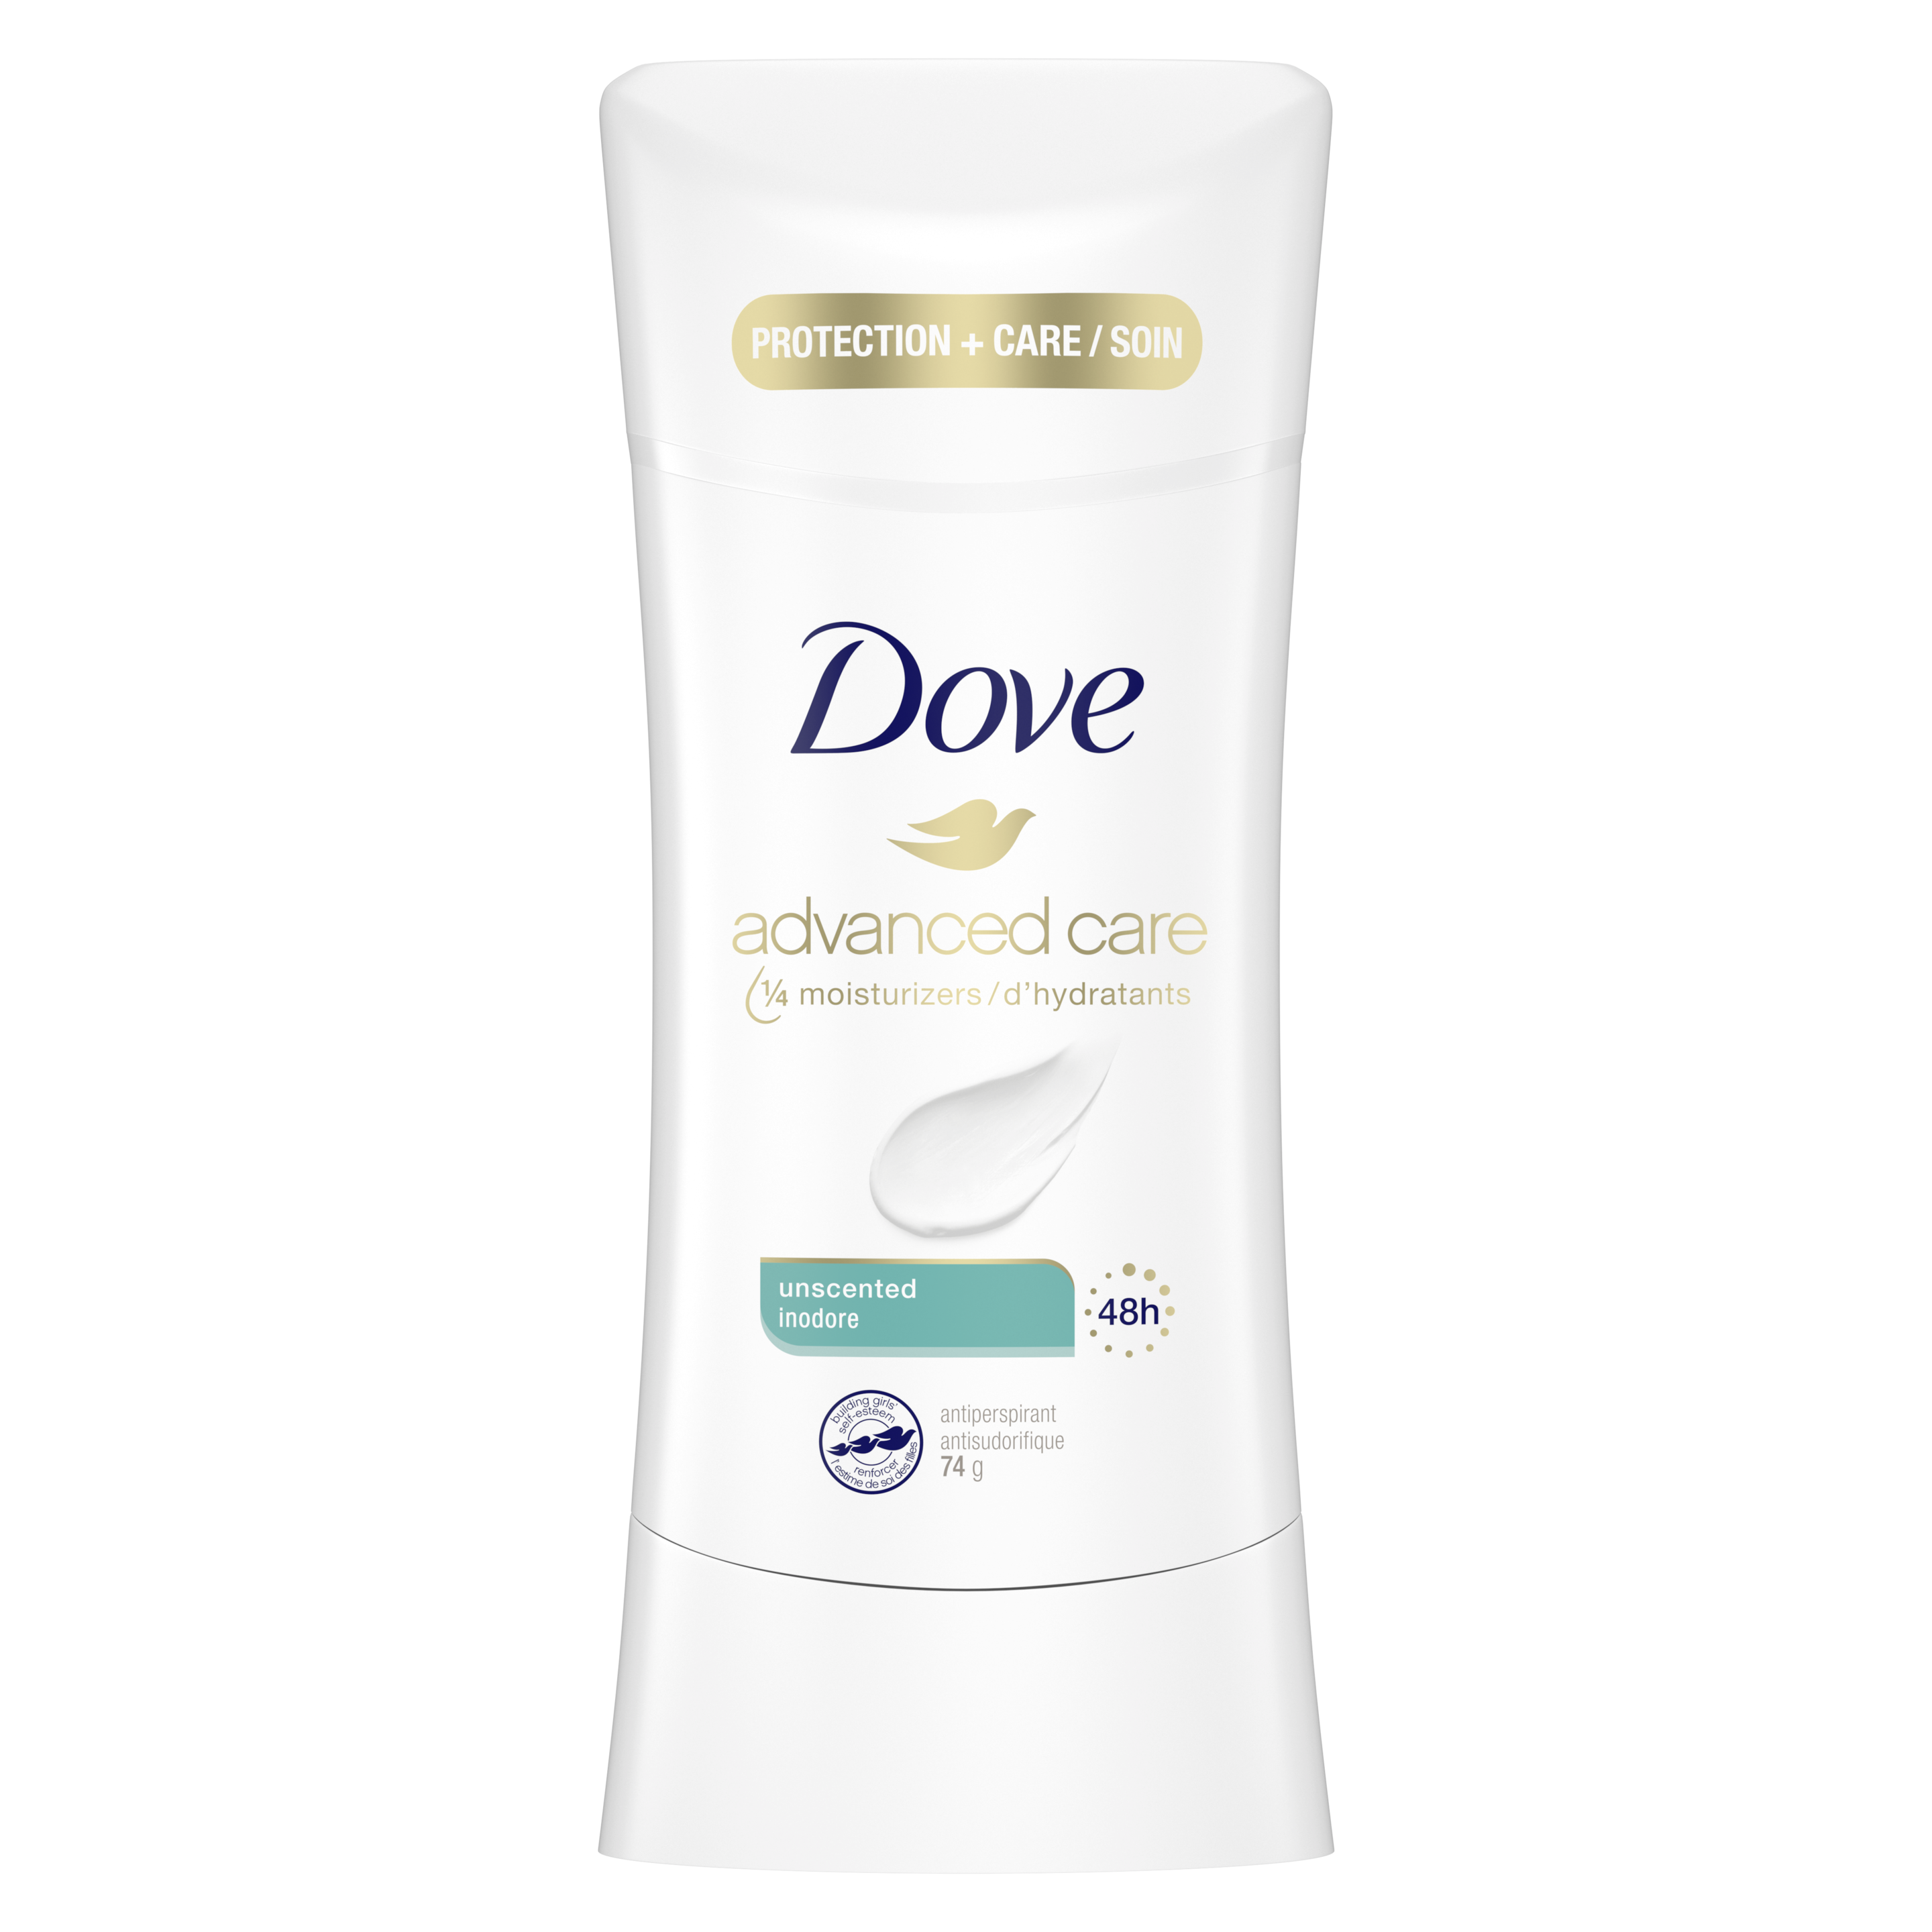 Dove Advanced Care Cool Essentials Antiperspirant, 45 g Antiperspirant 